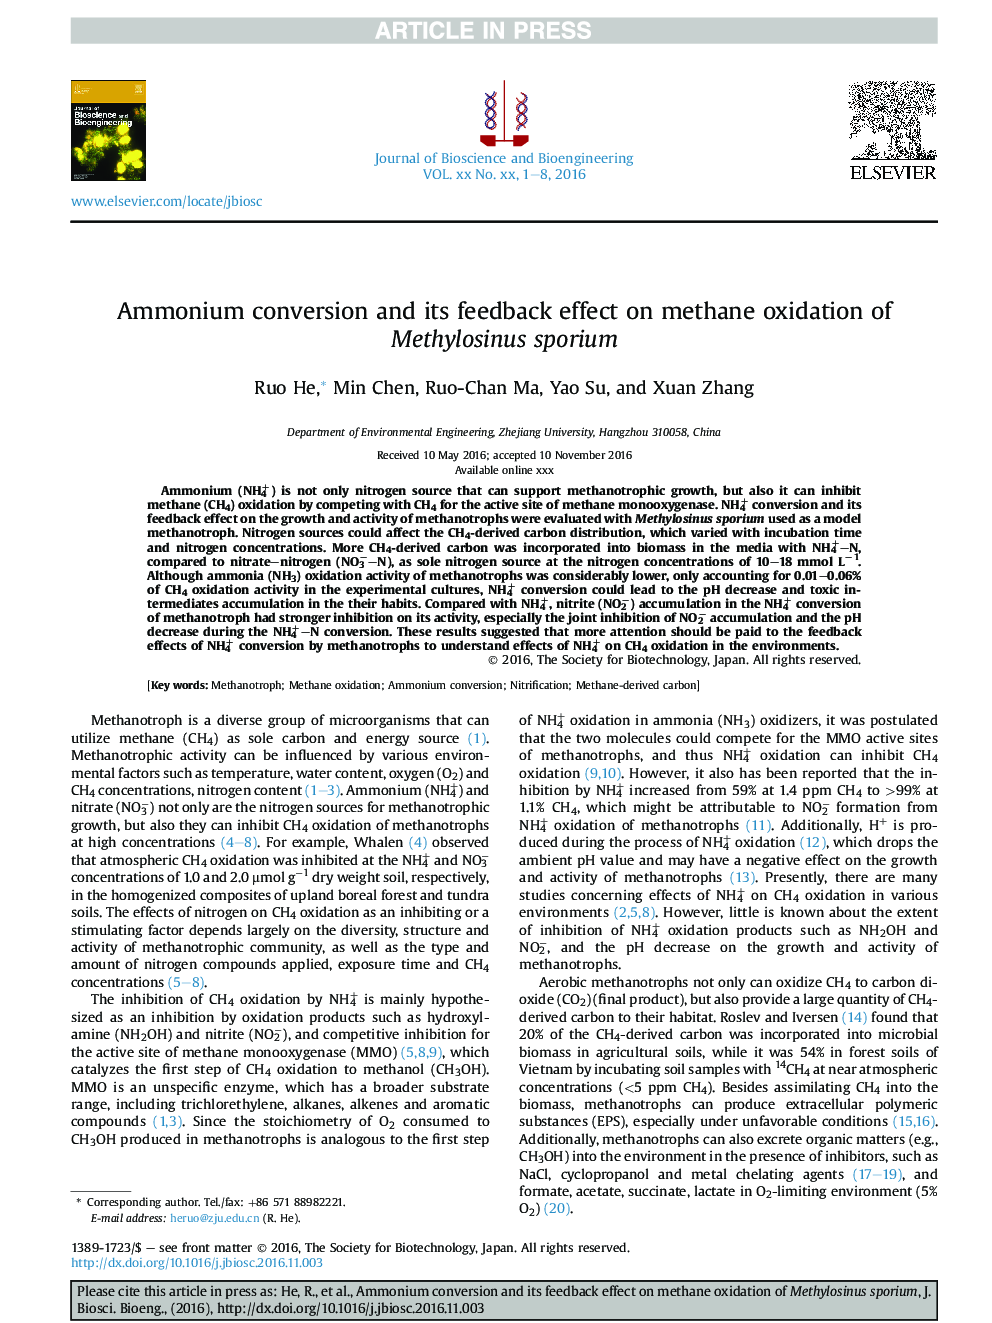 Ammonium conversion and its feedback effect on methane oxidation of Methylosinus sporium